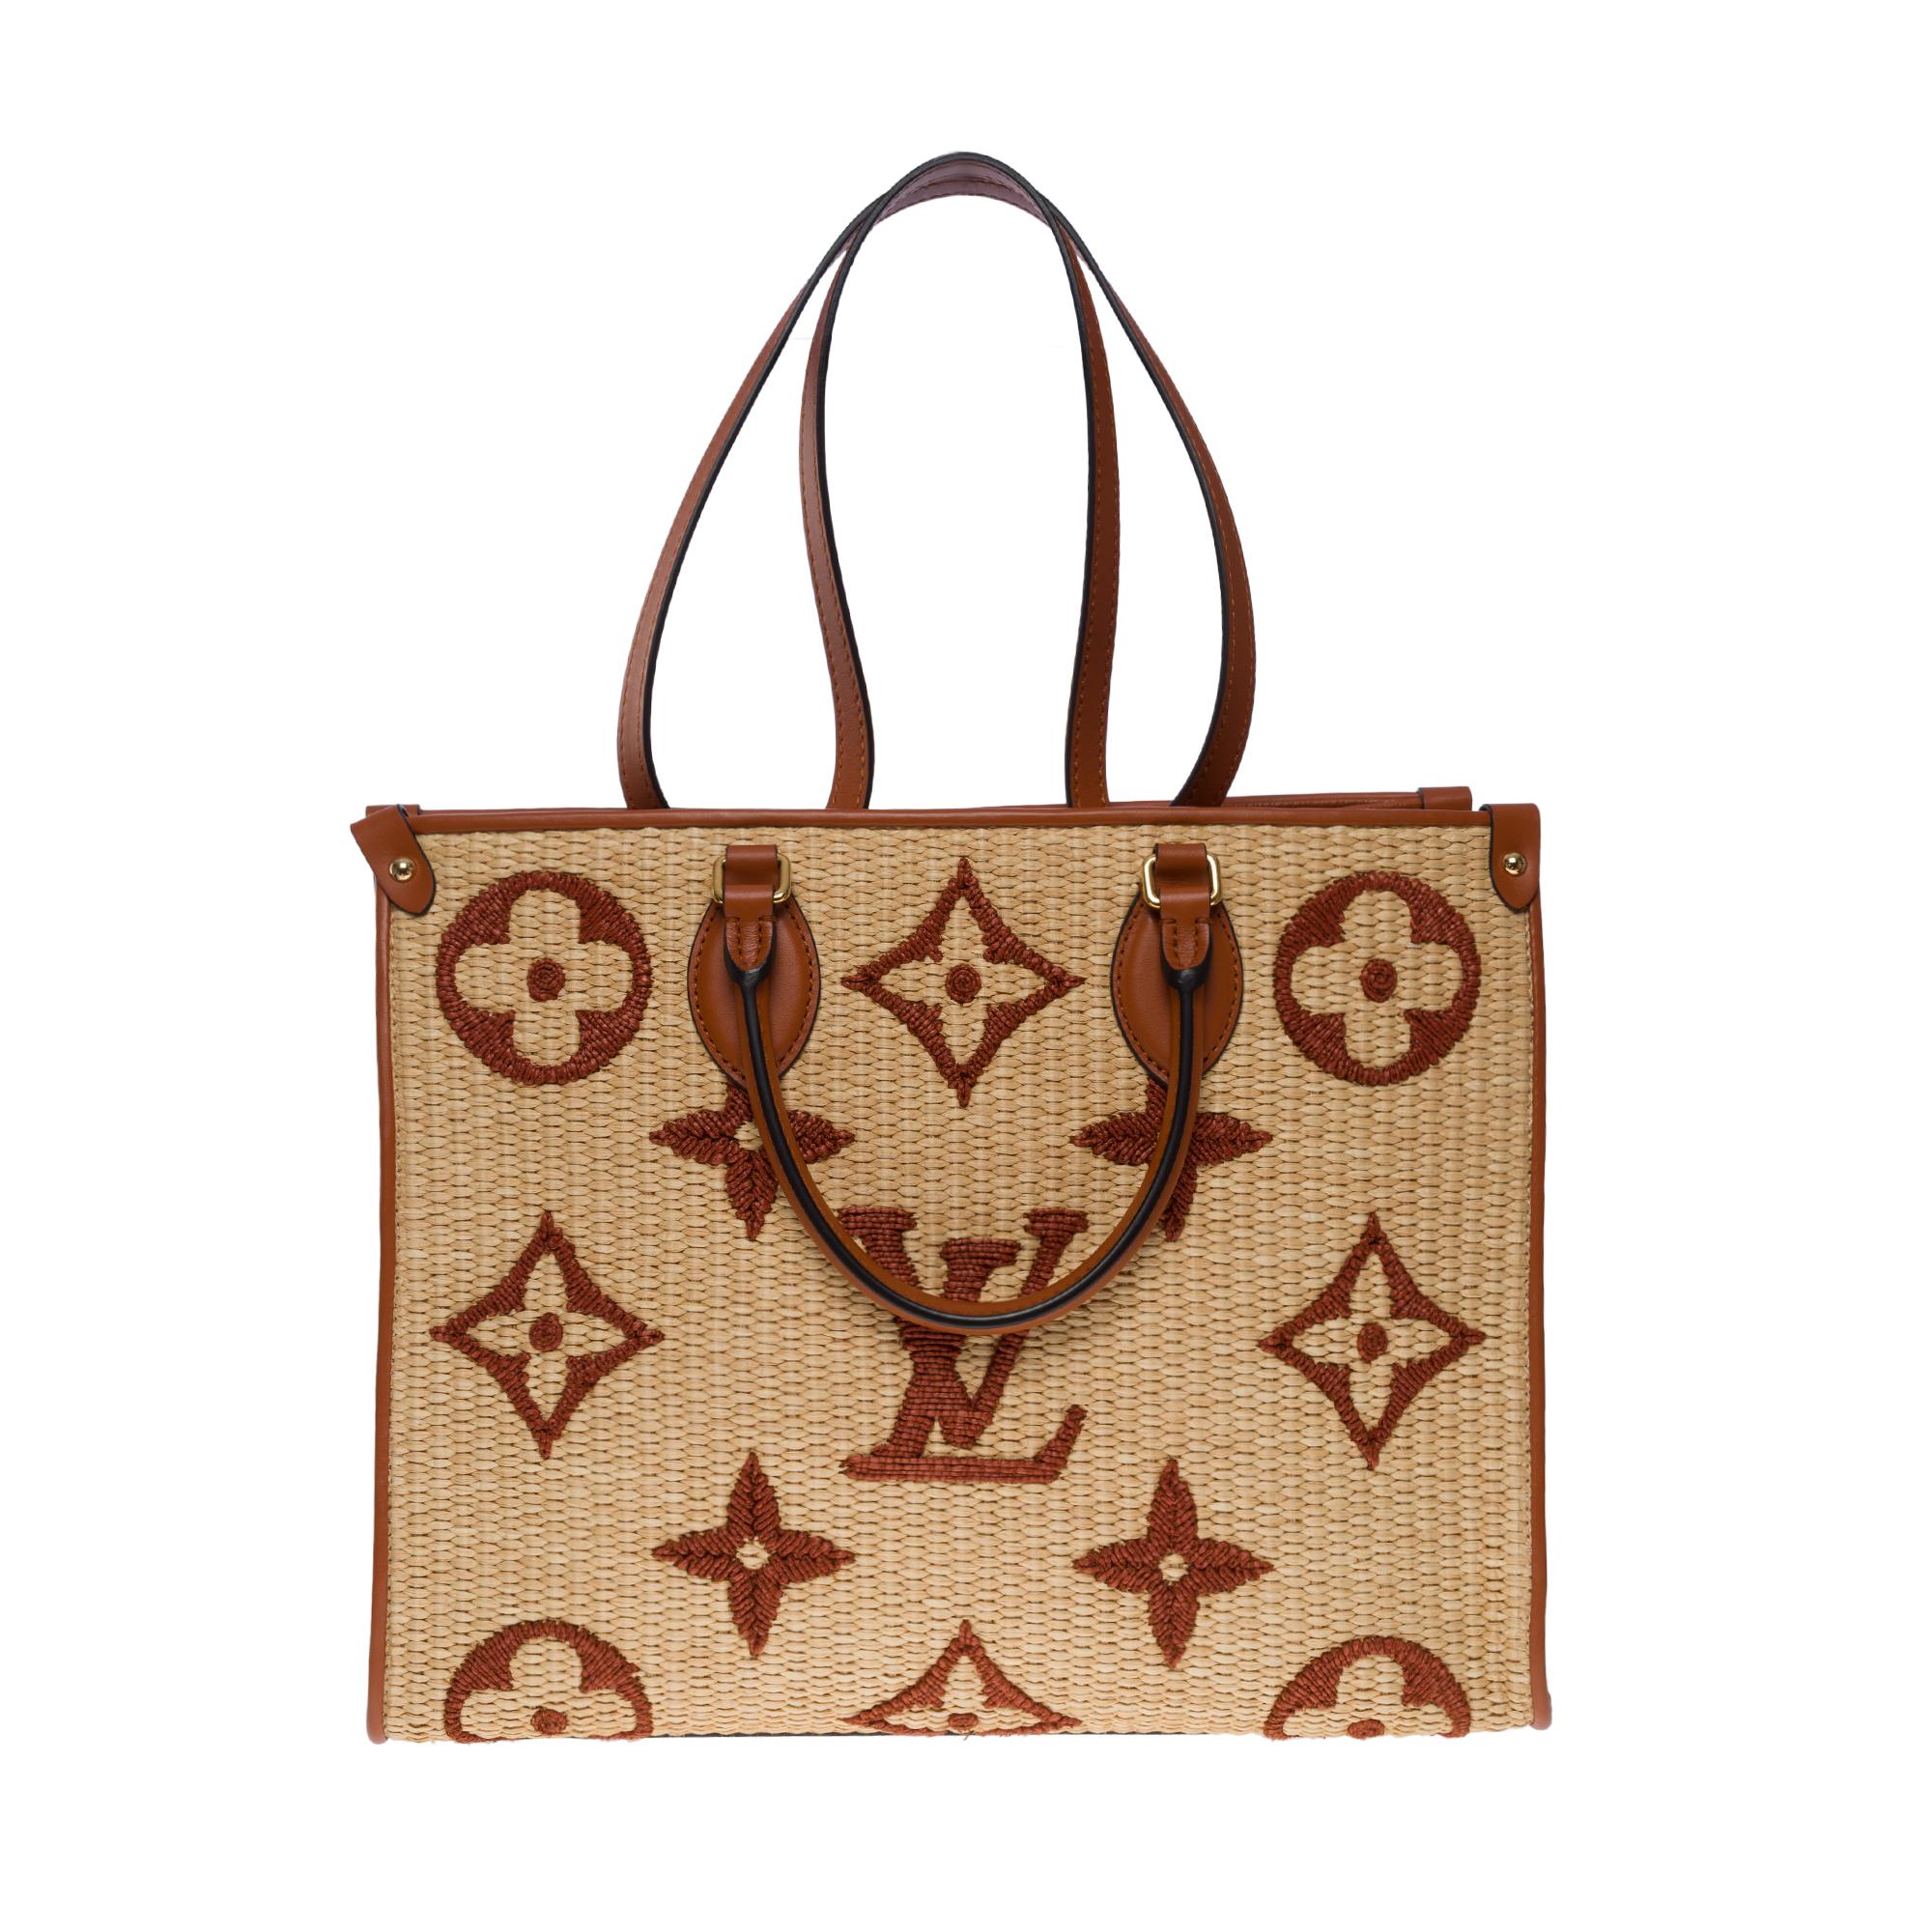 New Louis Vuitton Limited Edition Raffia Clutch Bag at 1stDibs  louis  vuitton raffia clutch bag, lv raffia clutch, louis vuitton raffia bag